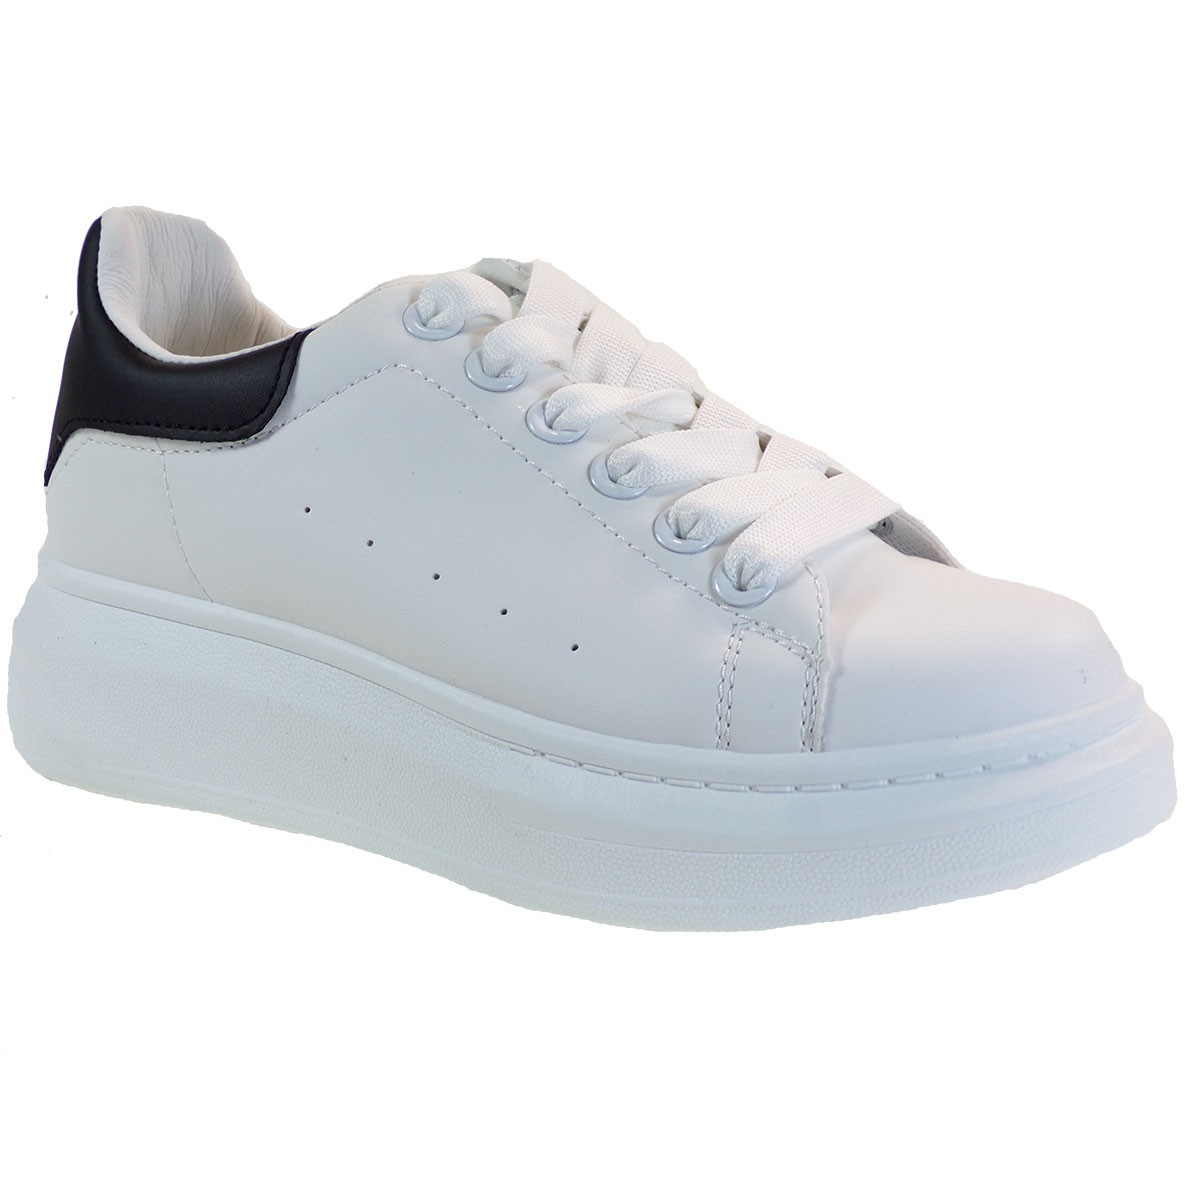 Bagiota Shoes Γυναικεία Παπούτσια Sneakers Αθλητικά C8962 Λευκό-Μαύρο